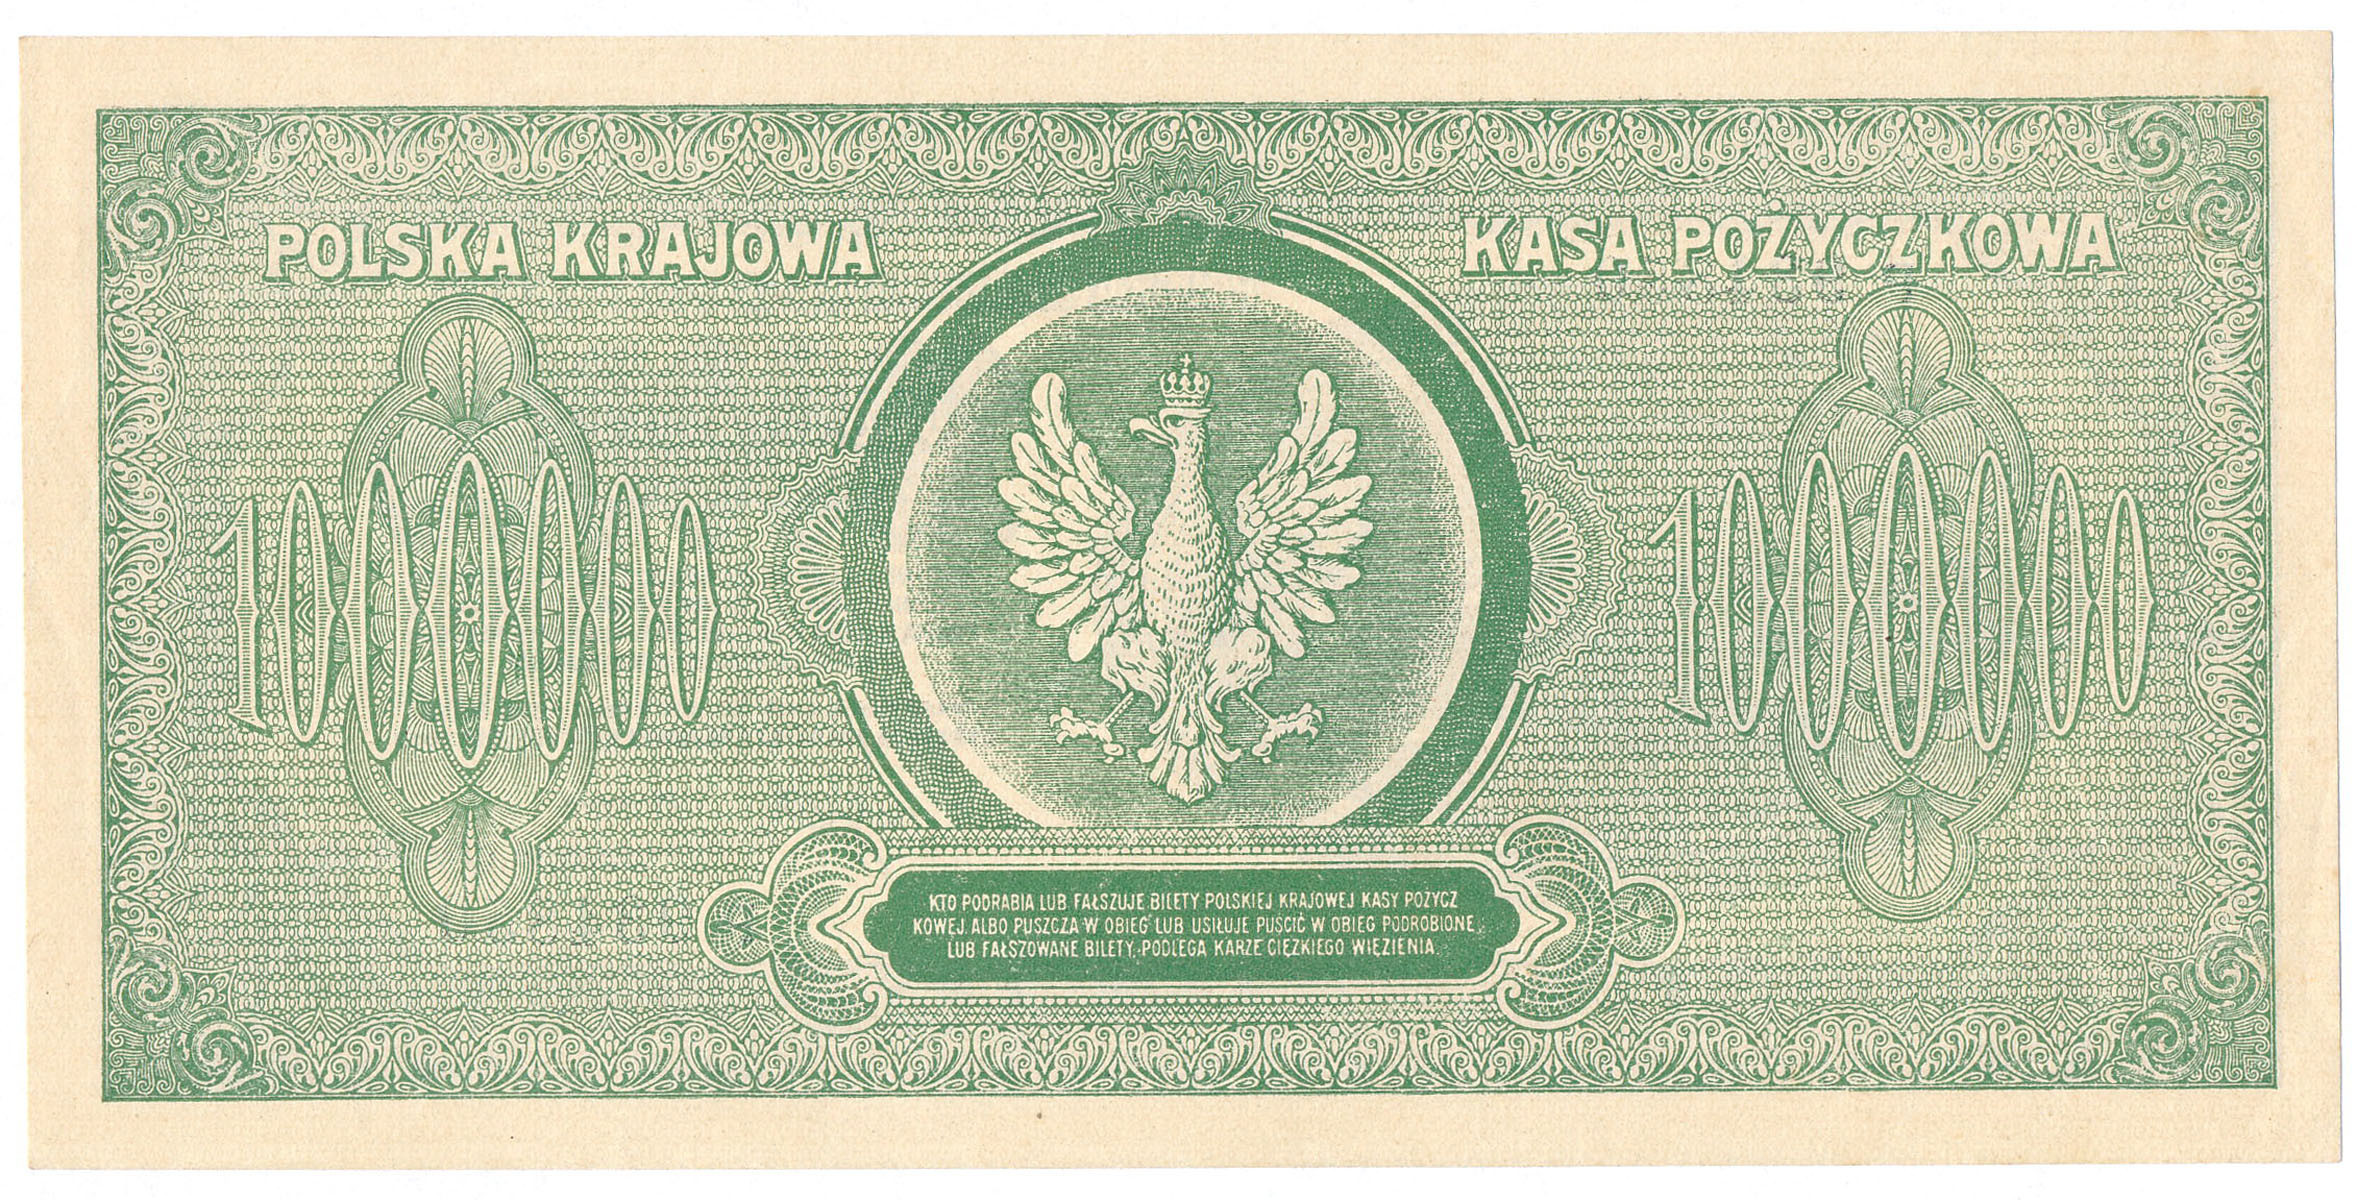 100.000.000 marek polskich 1923 seria P - RZADKIE